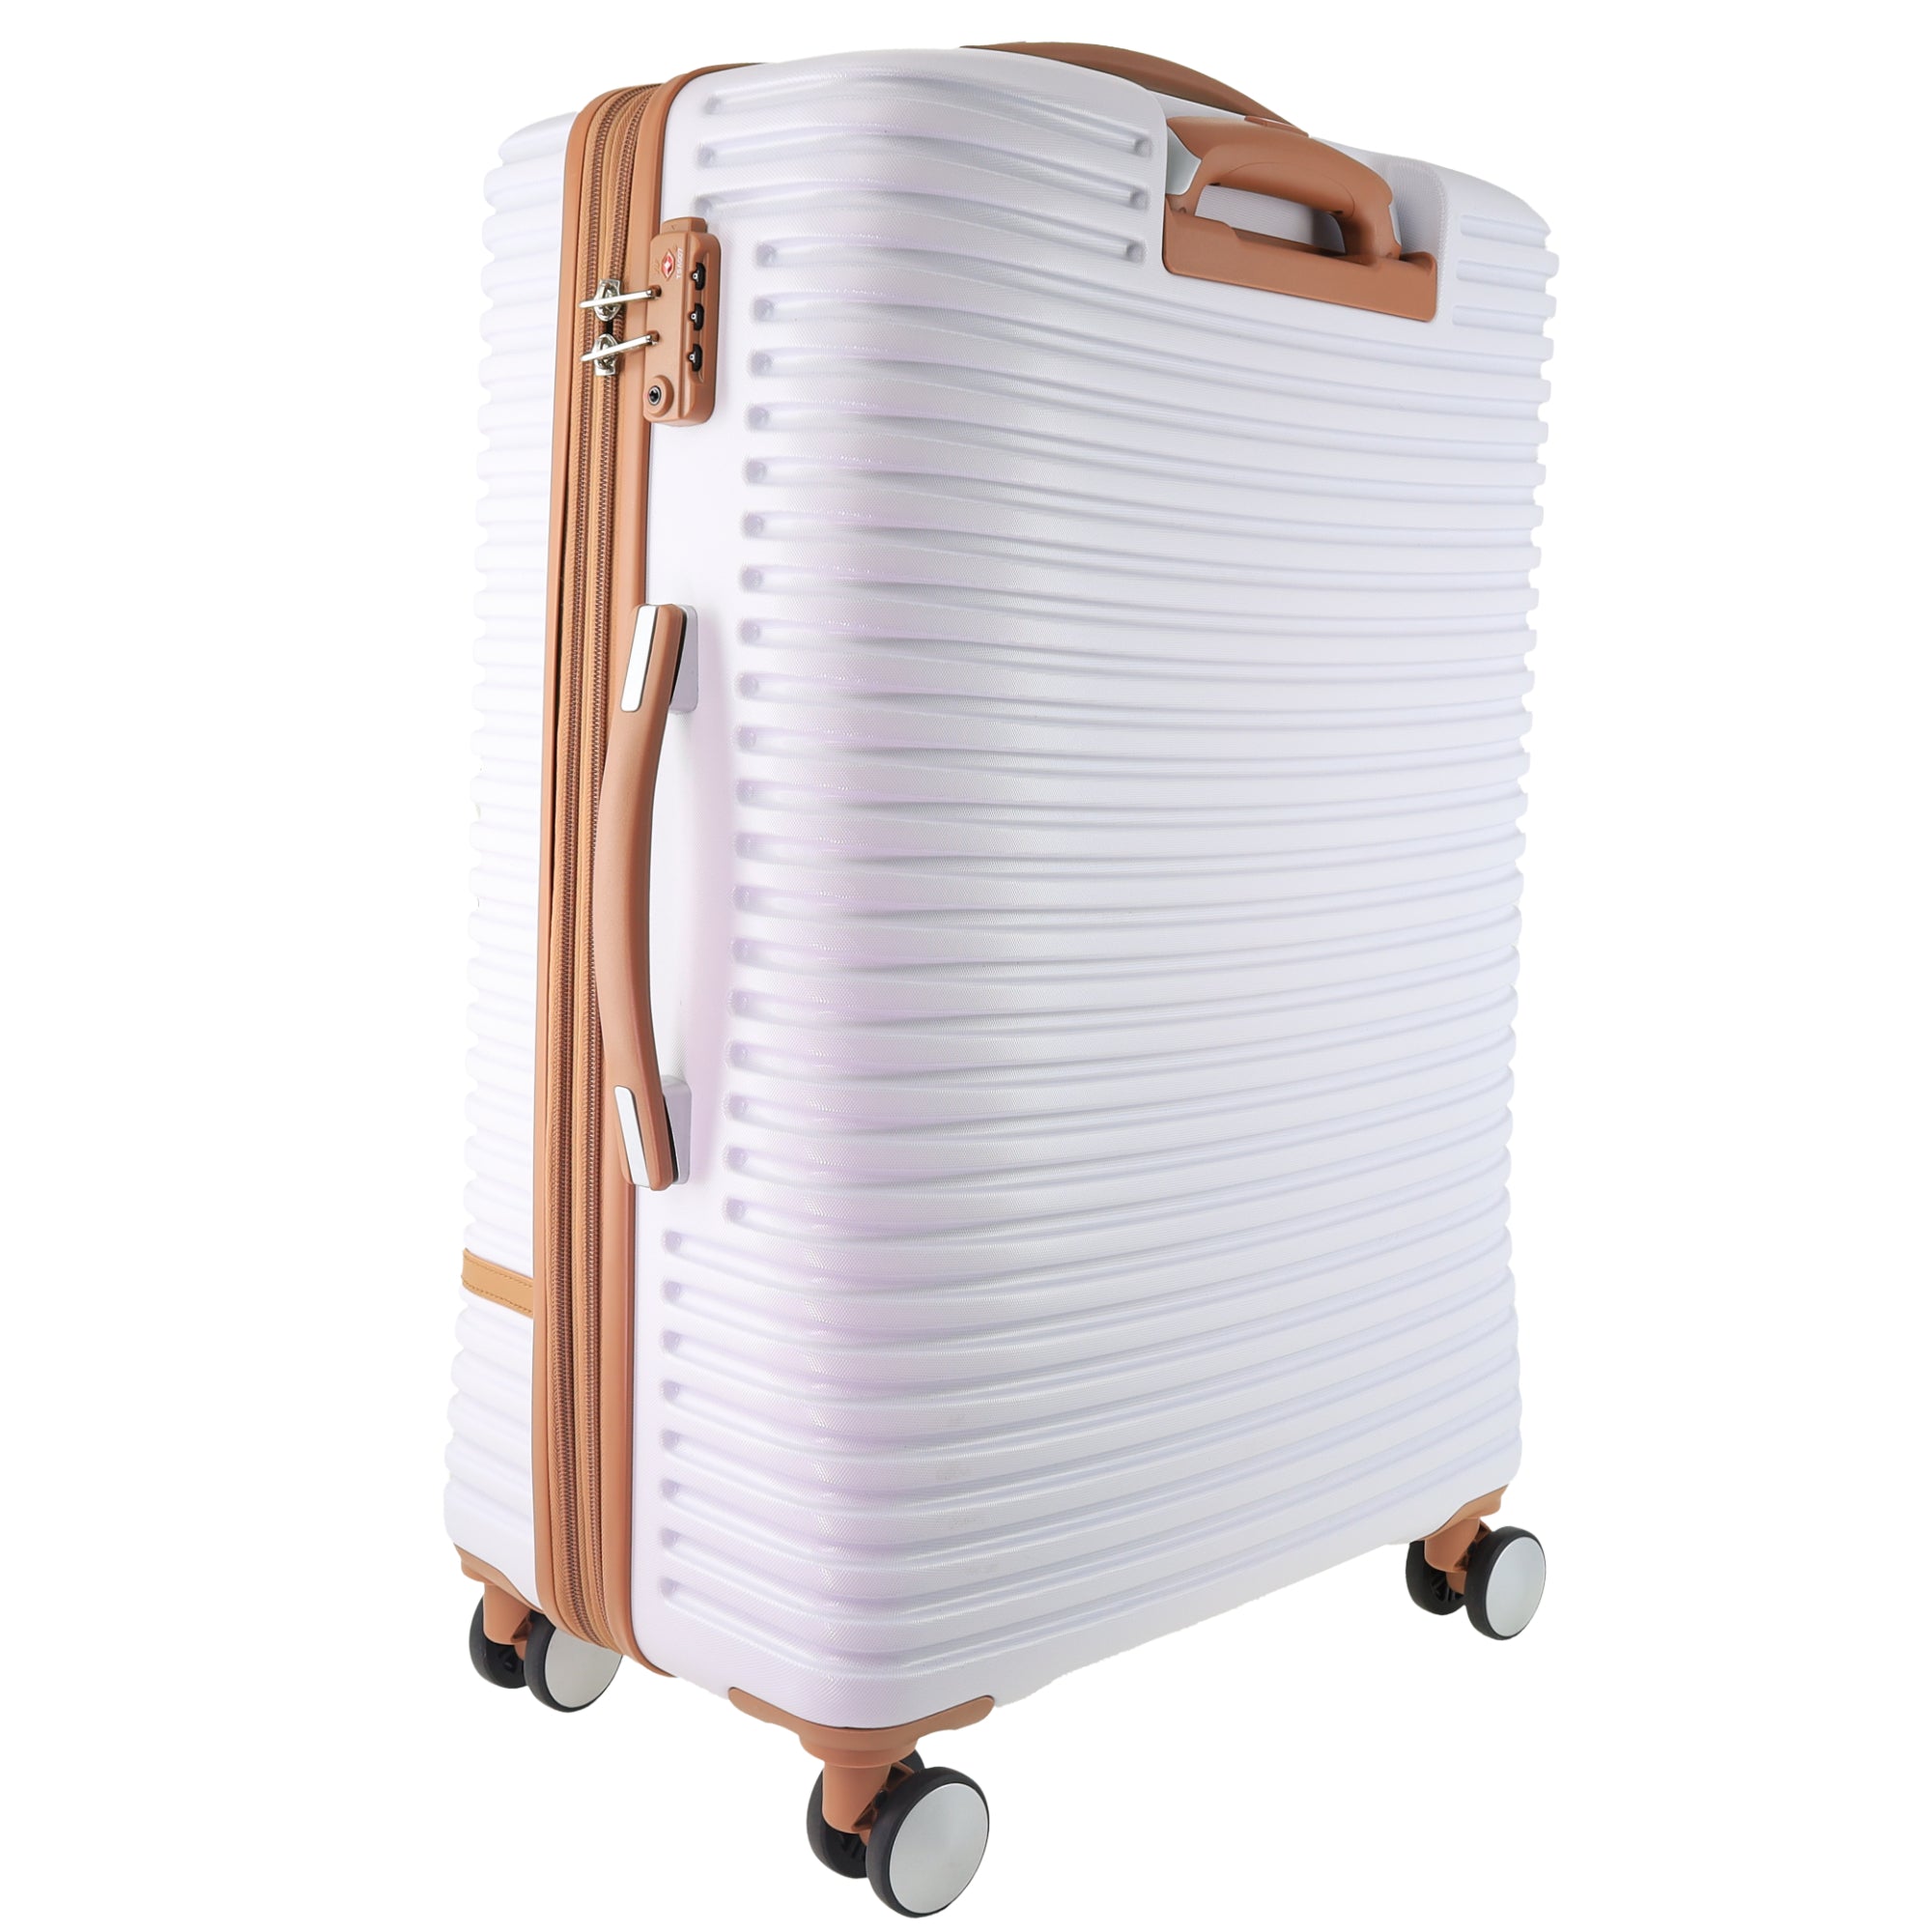 Pierre Cardin 70cm MEDIUM Hard Shell Suitcase in White